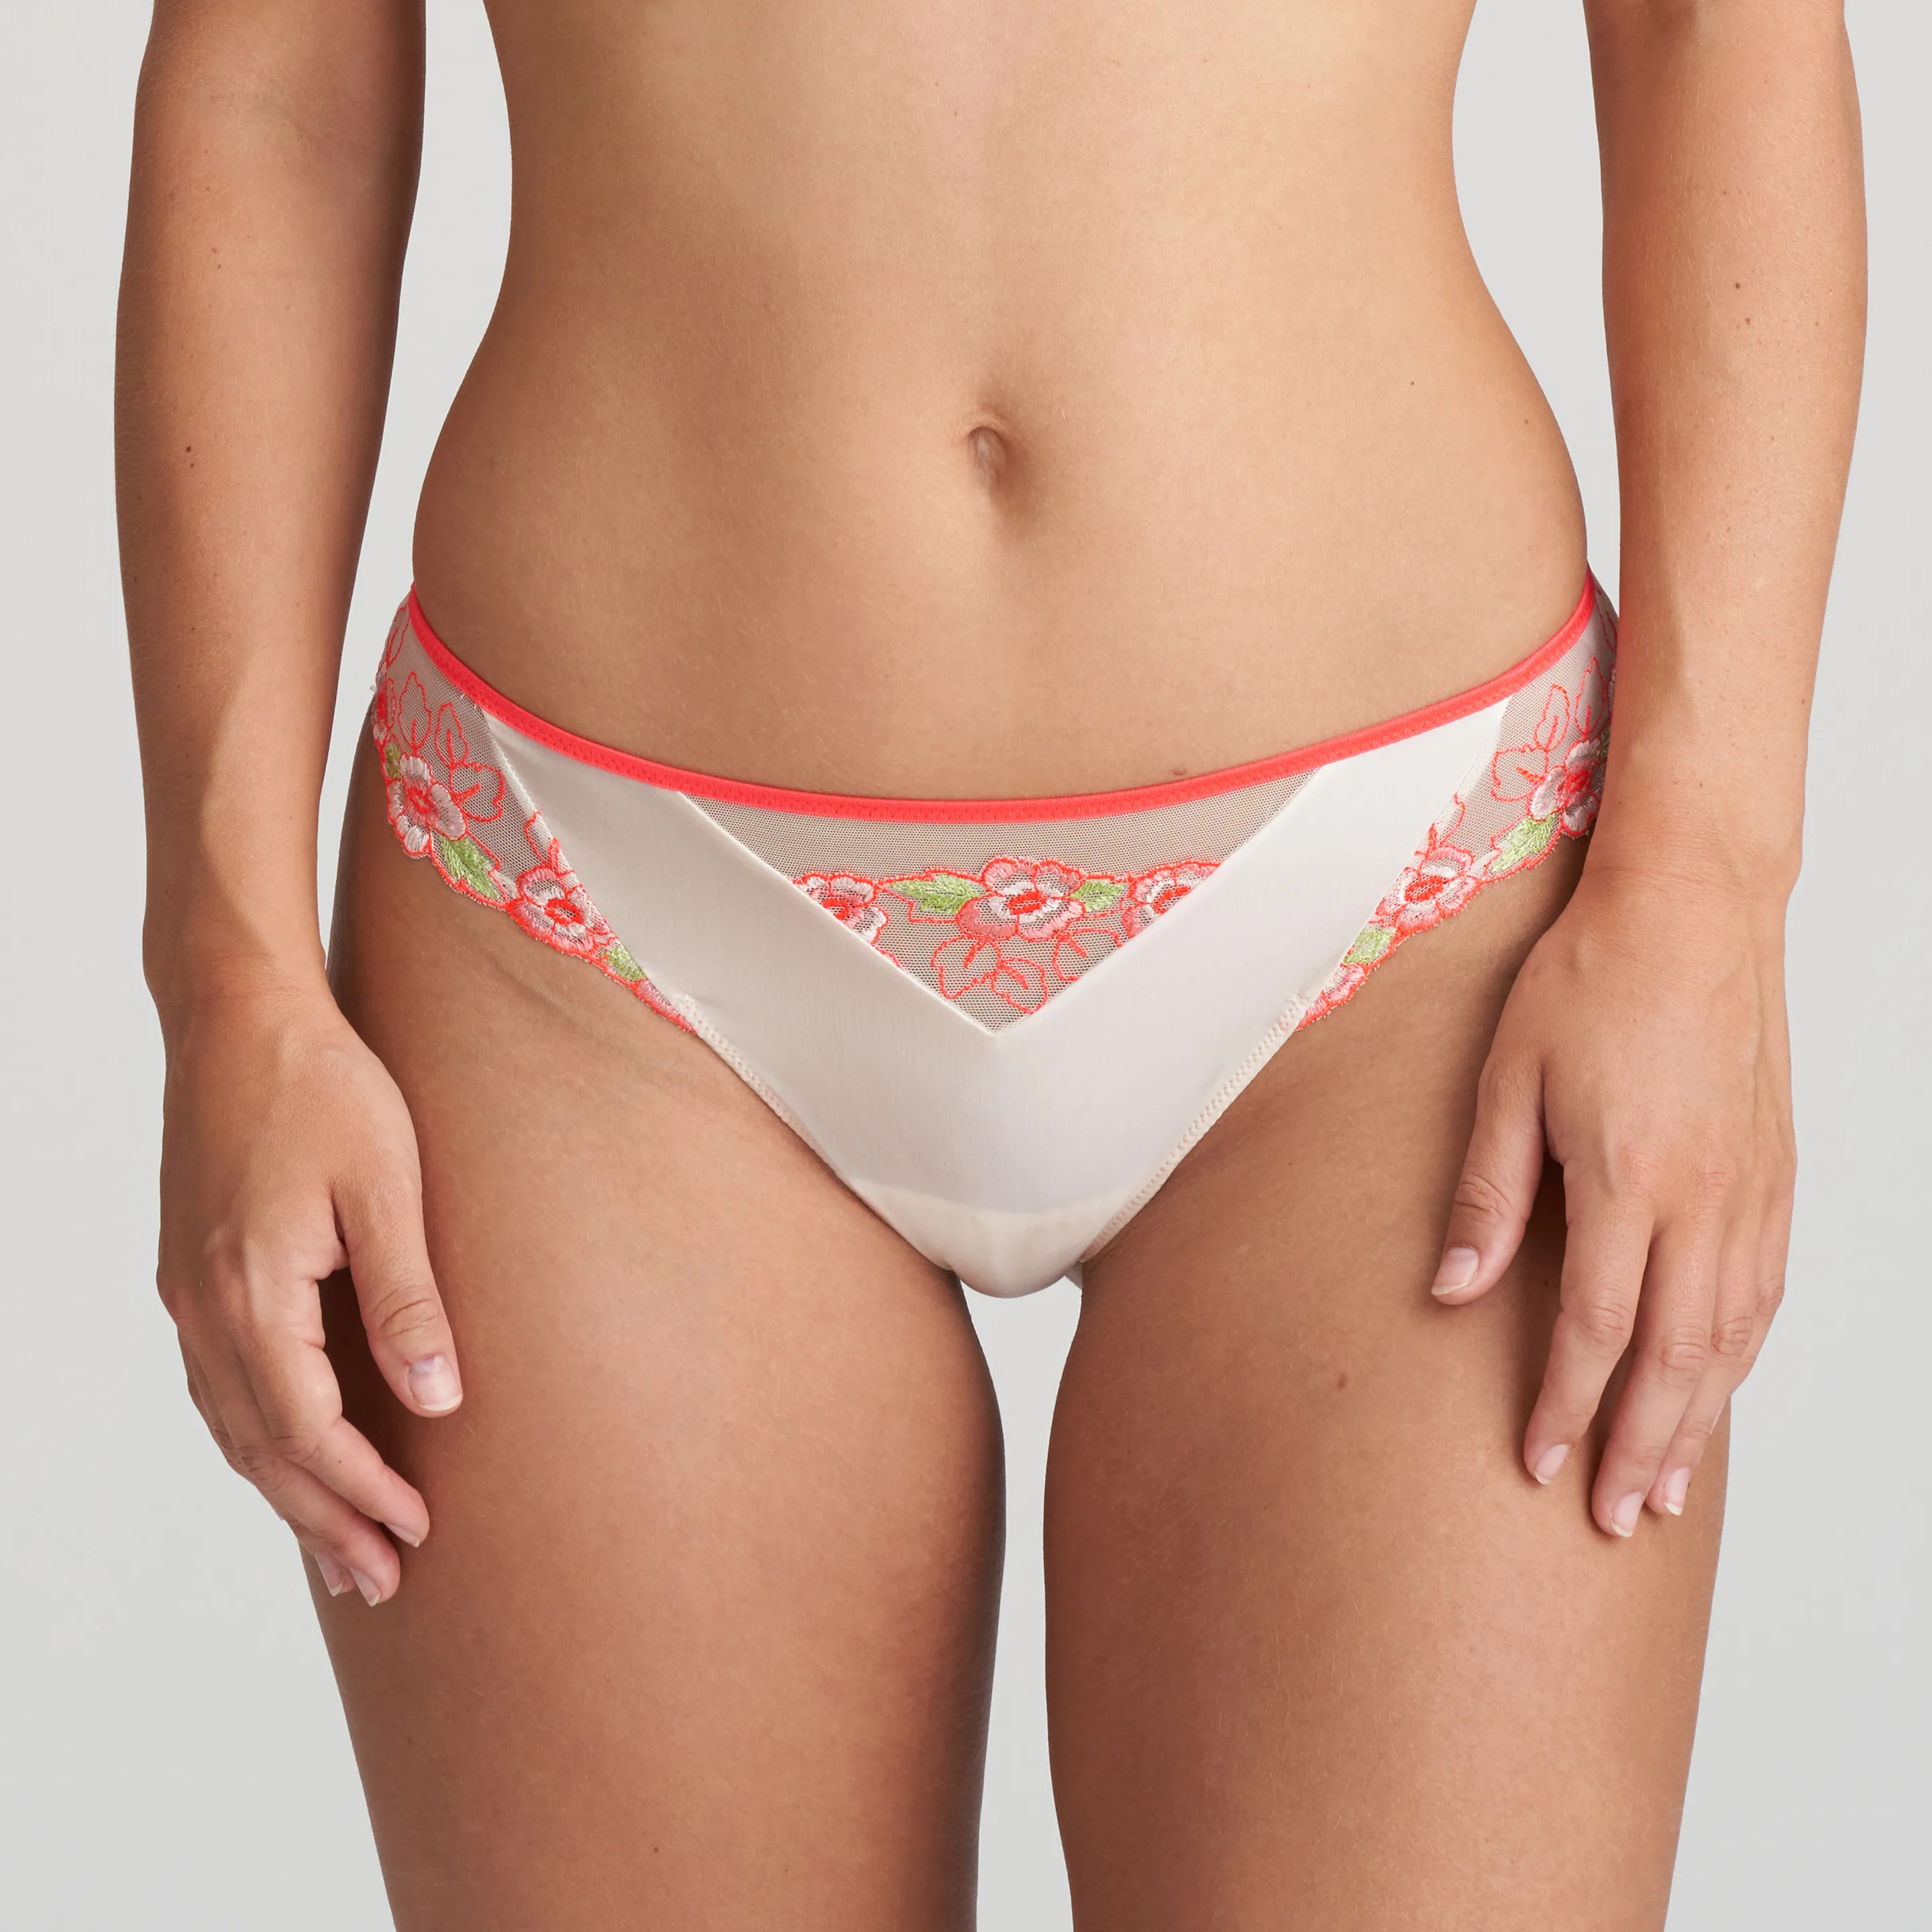 Buy Seamless Brazilian Cut Panties online